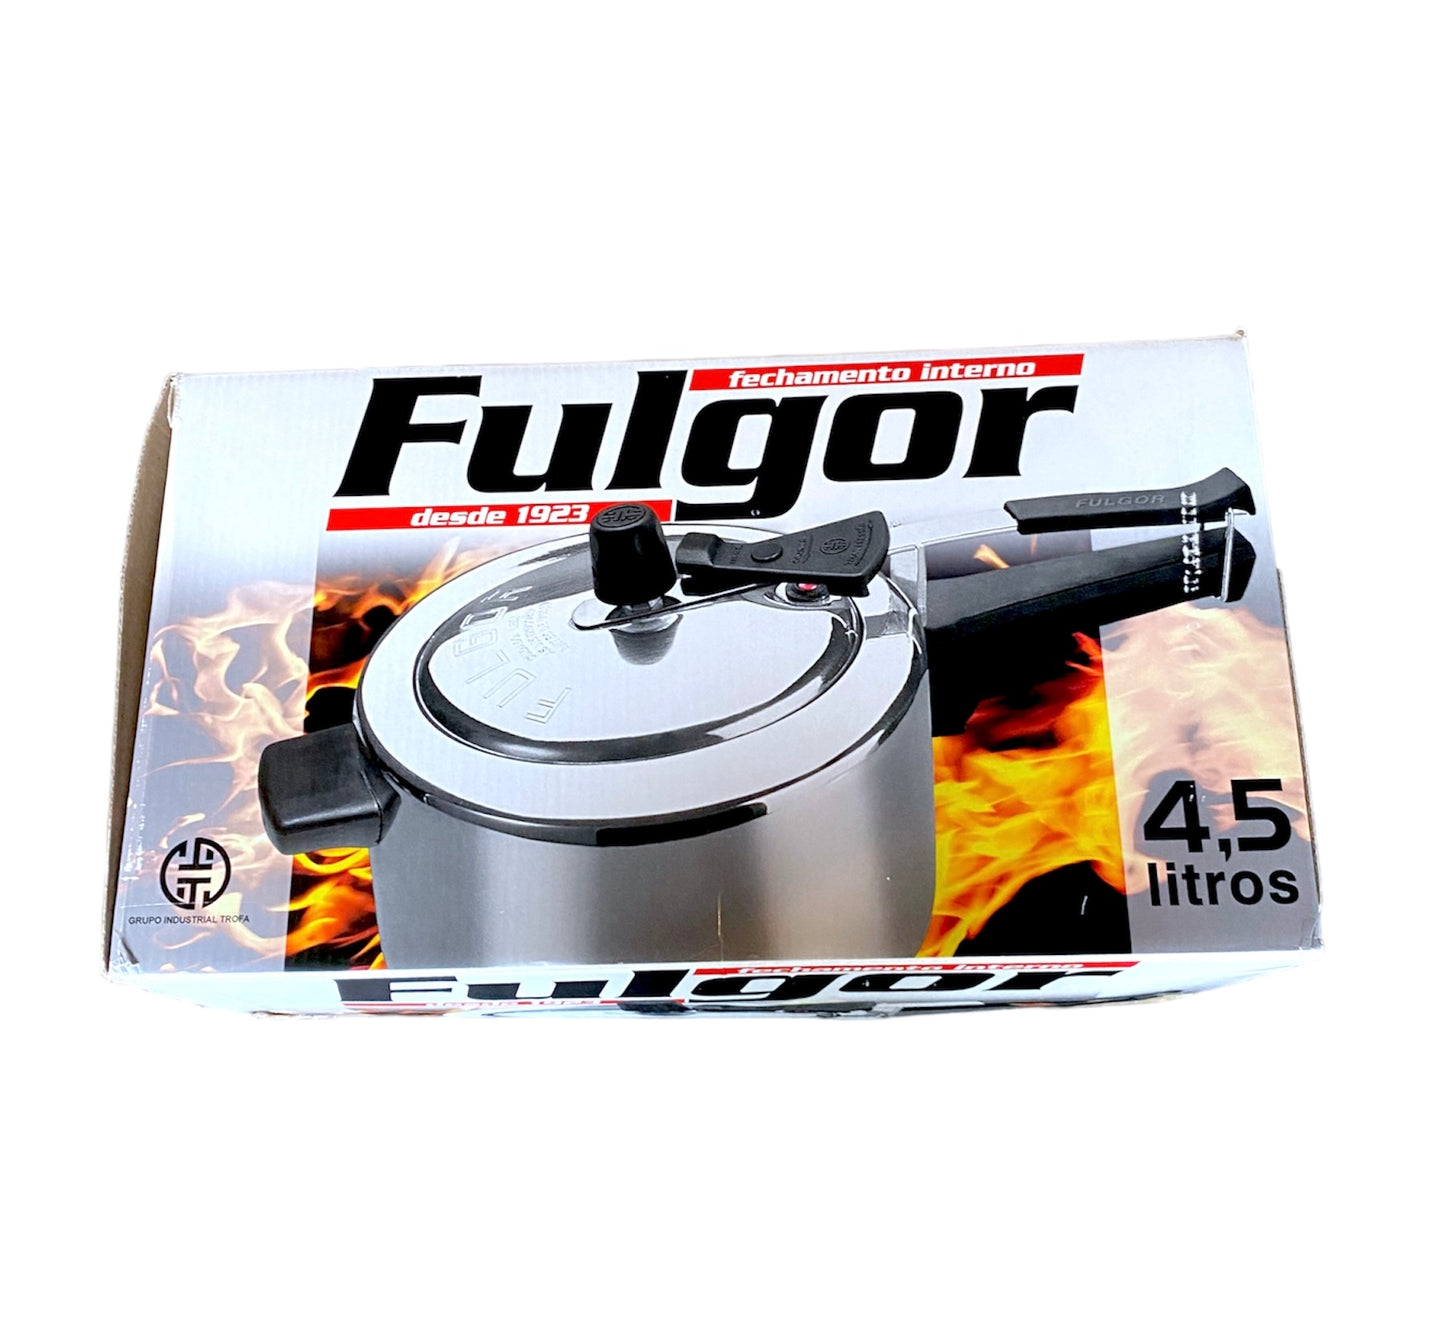 Fulgor desde 1923 | Pressure Cooker